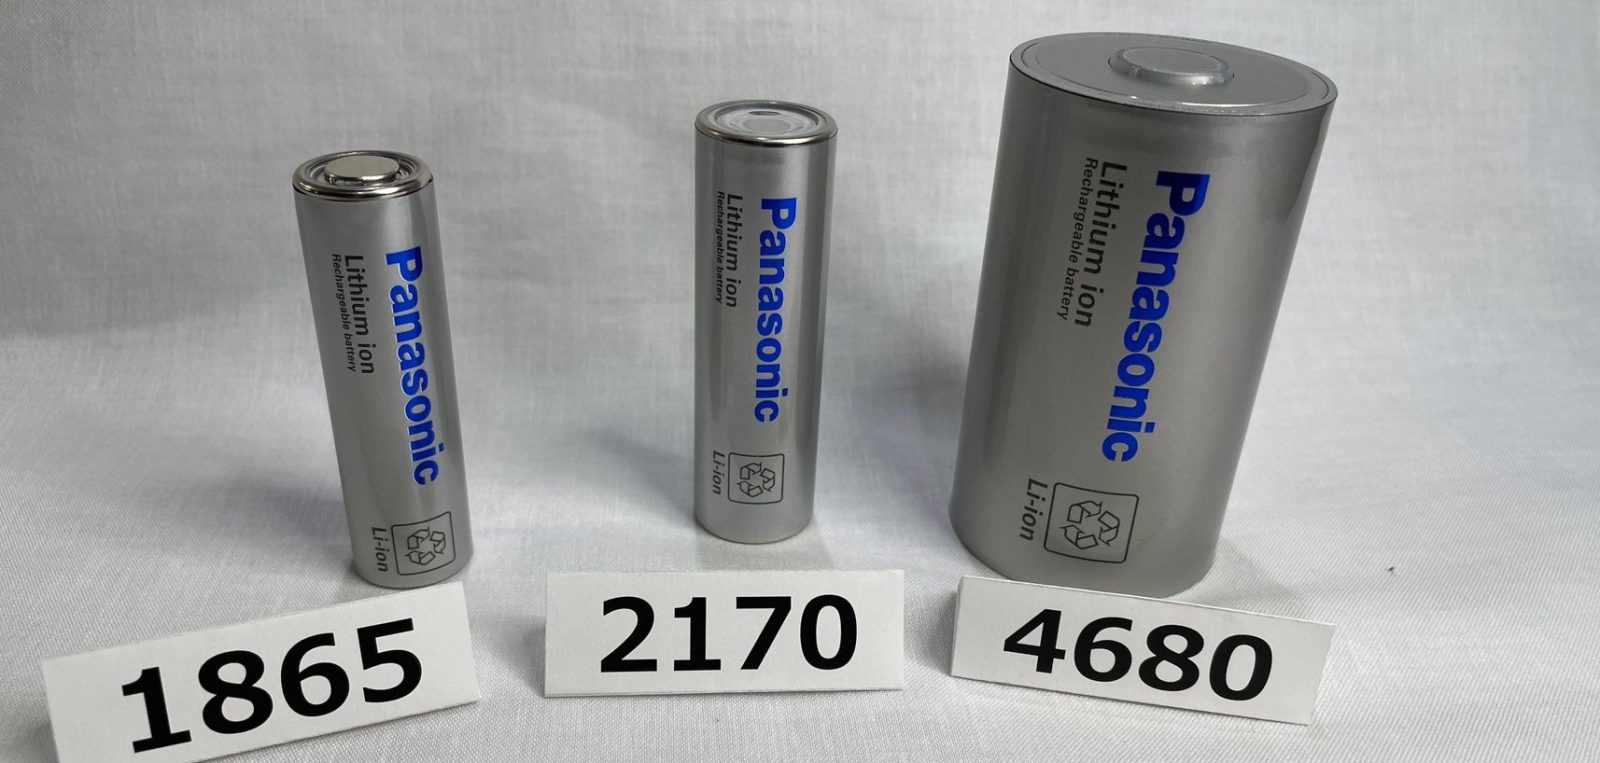 Panasonic Tesla 4680 battery cells